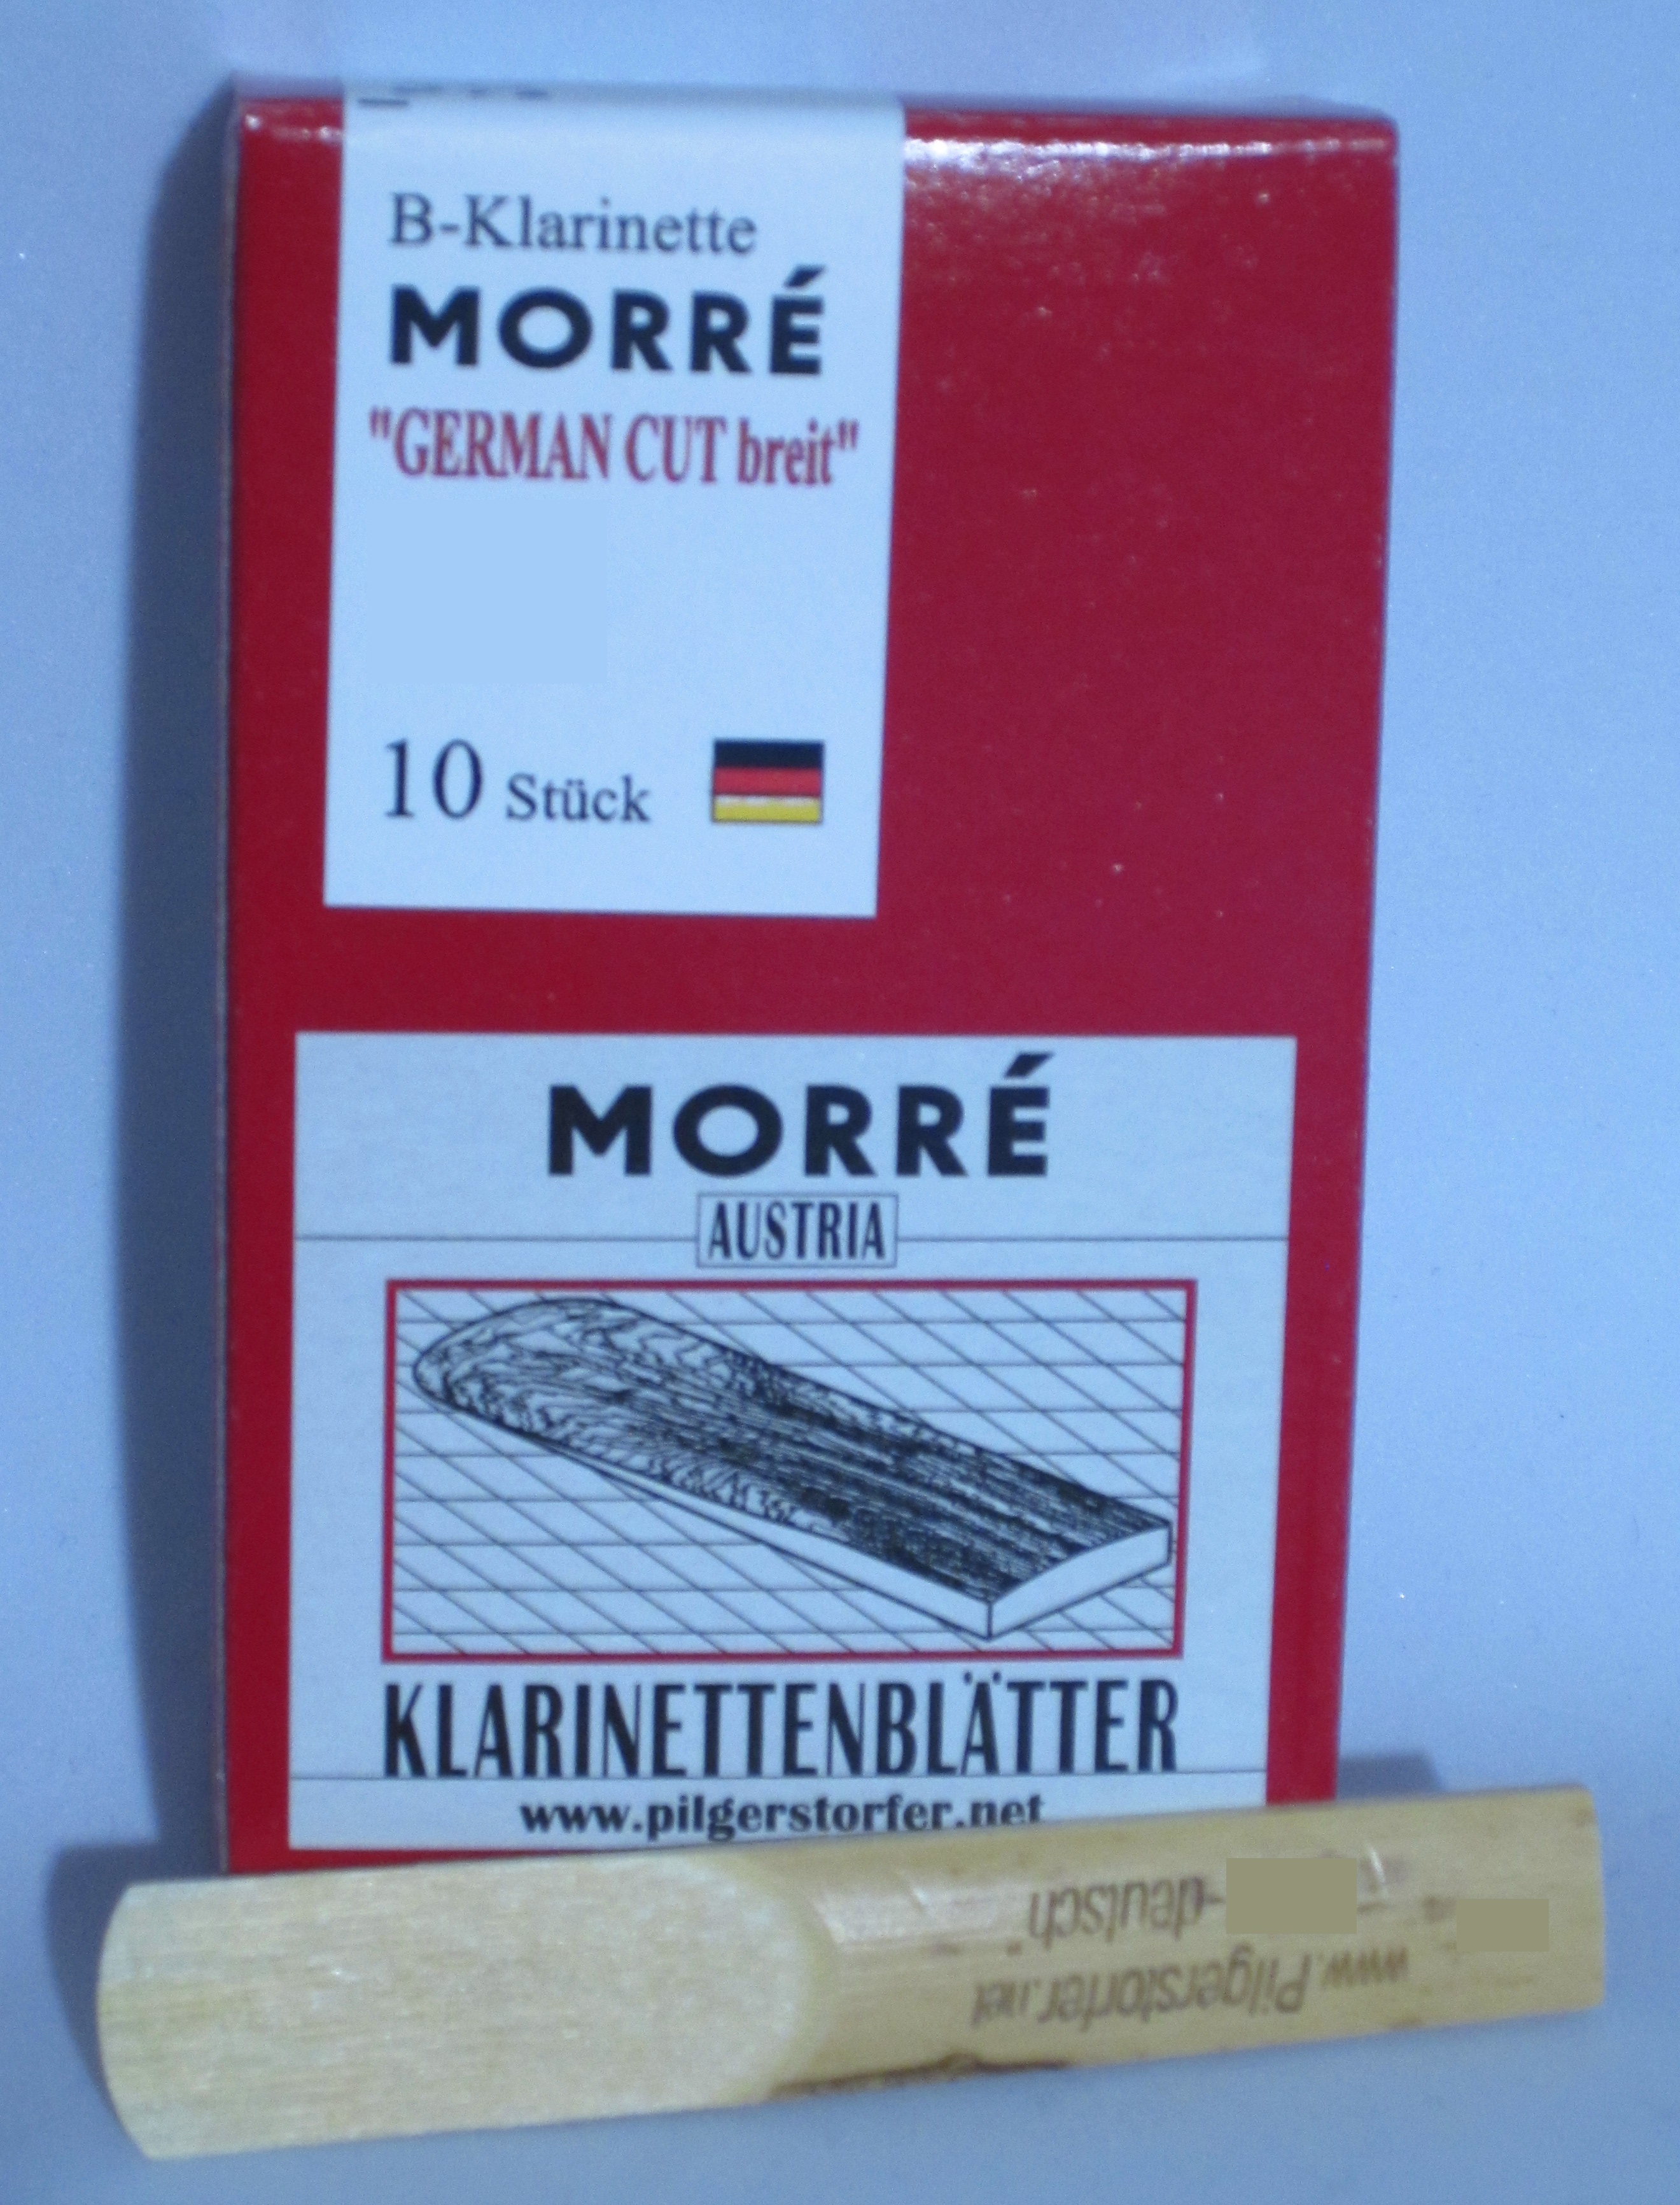 Klarinettenblätter Pilgerstorfer Morré German Cut breit Stärke: 3 1/2